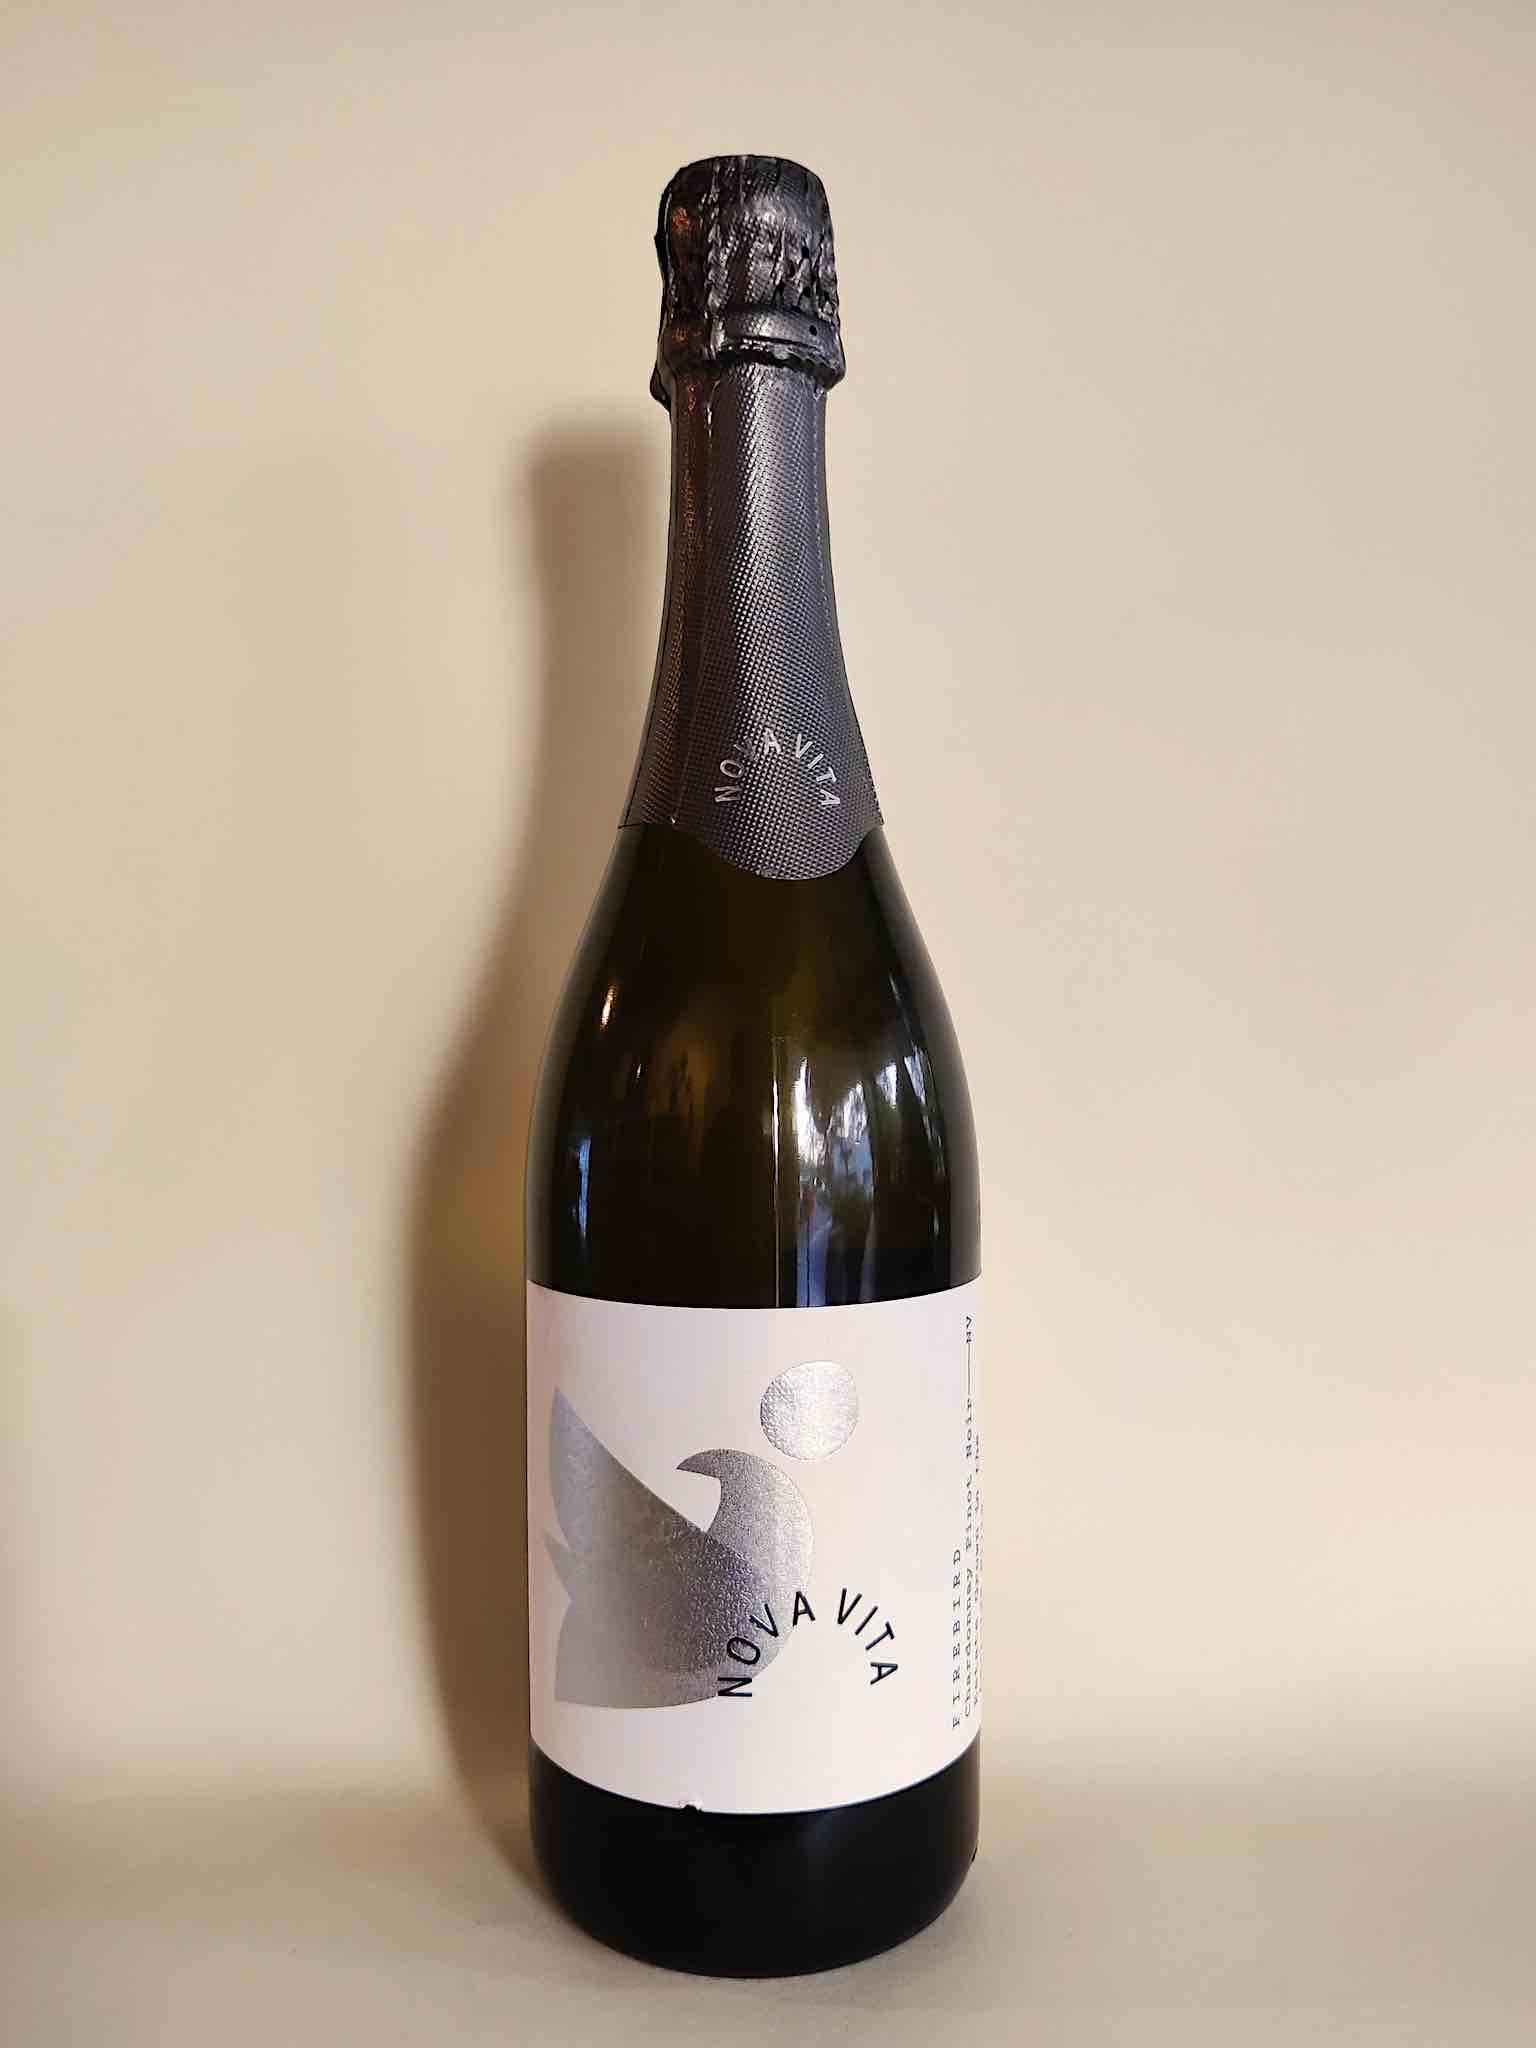 A 750ml bottle of Nova Vita Sparkling wine from the Adelaide Hills, South Australia.